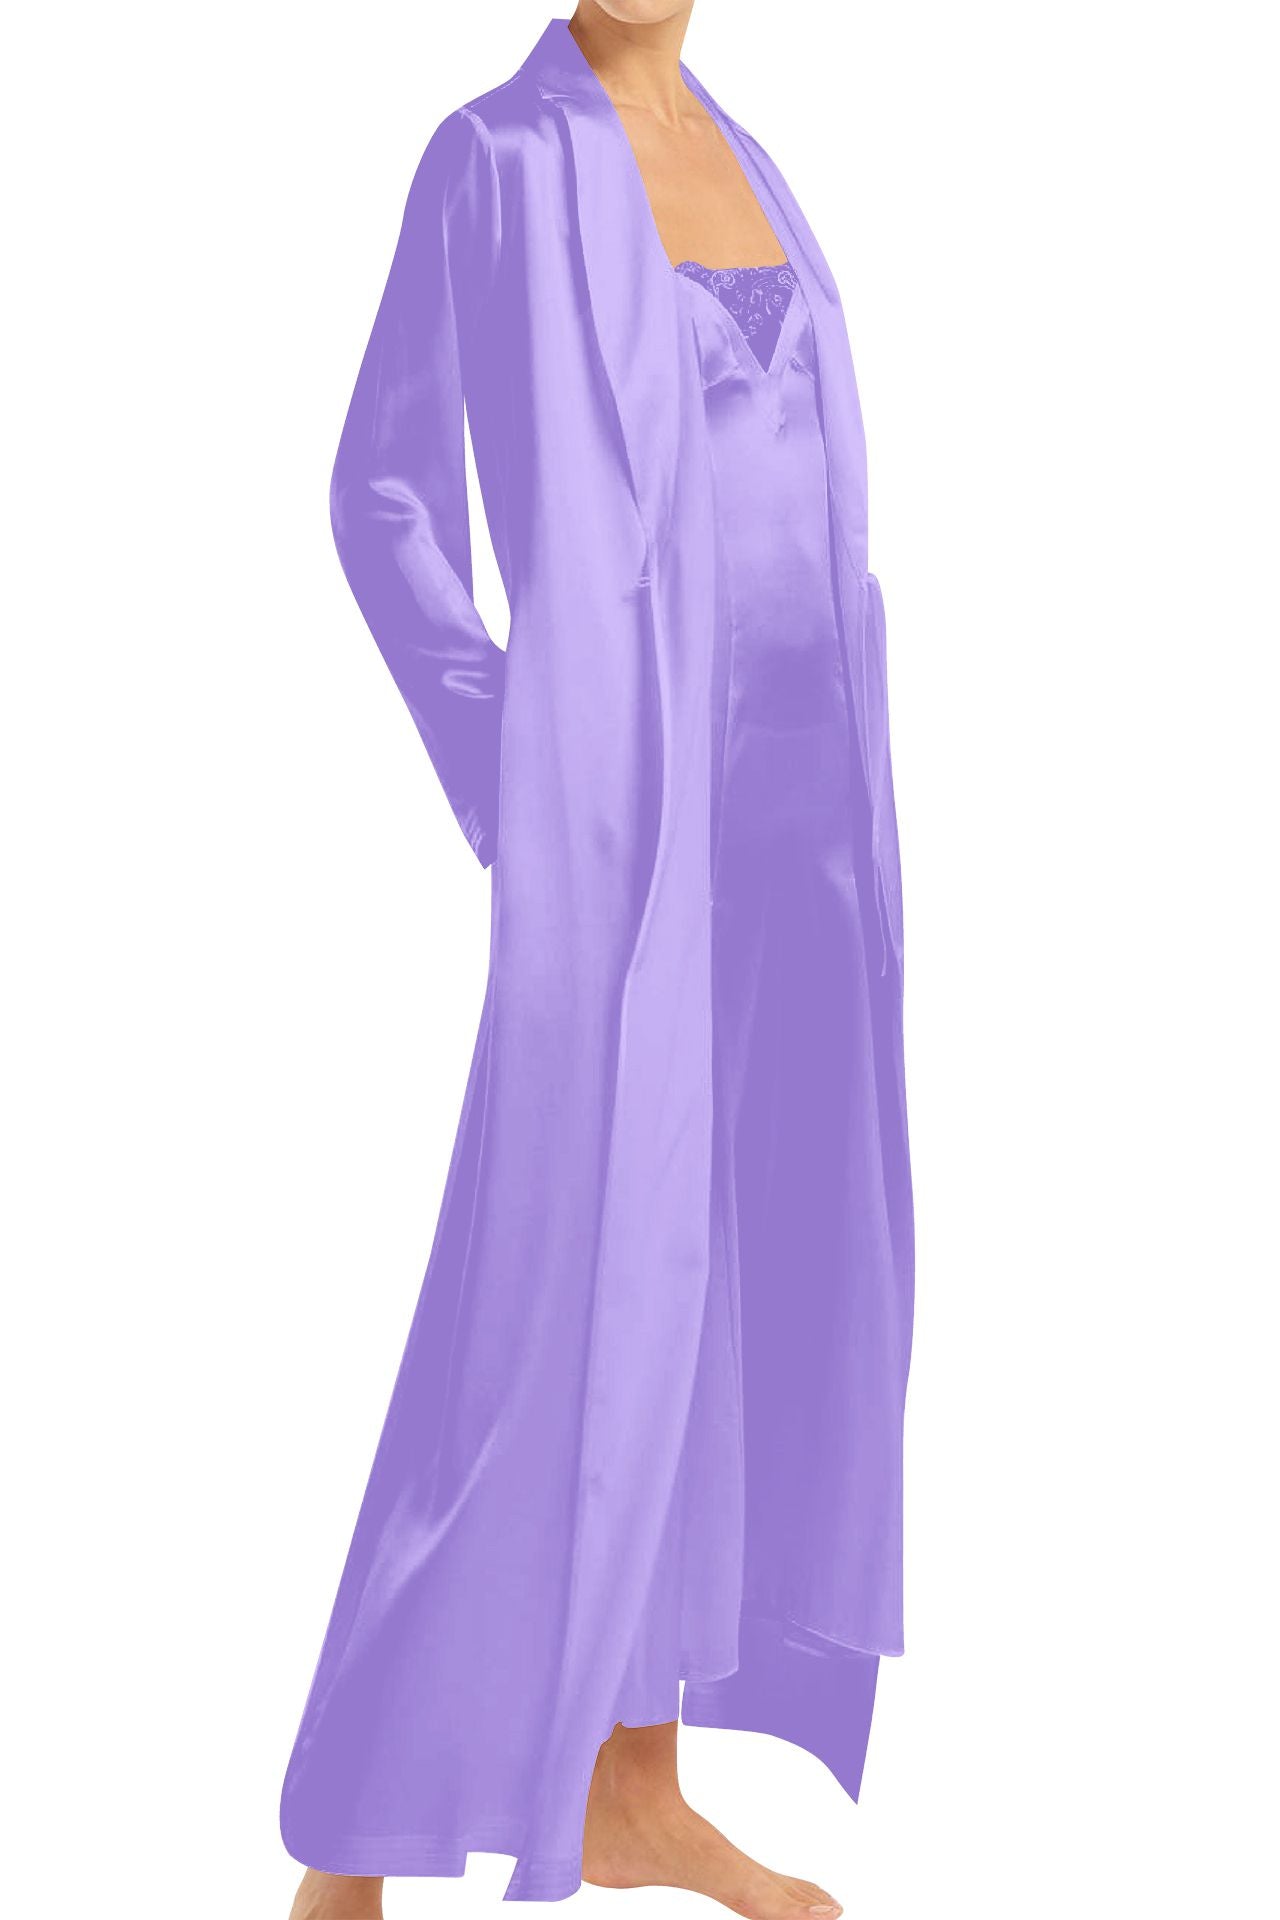 "wrap dresses with sleeves" "wrap dress maxi long sleeve" "Kyle X Shahida" "light purple wrap dress"